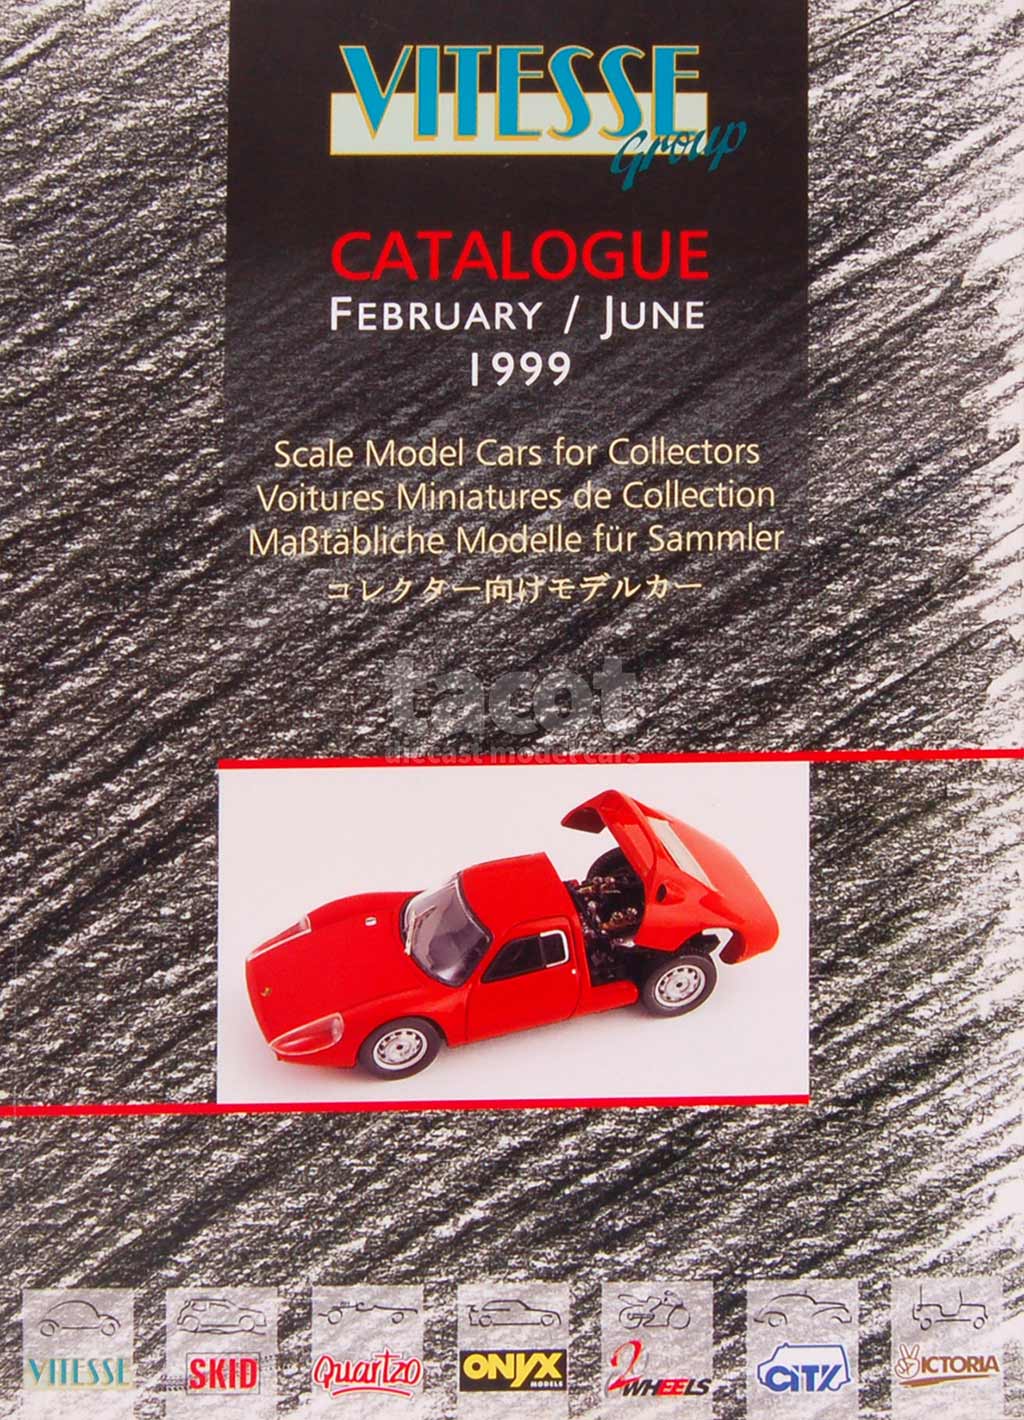 340 Catalogue Vitesse 1999